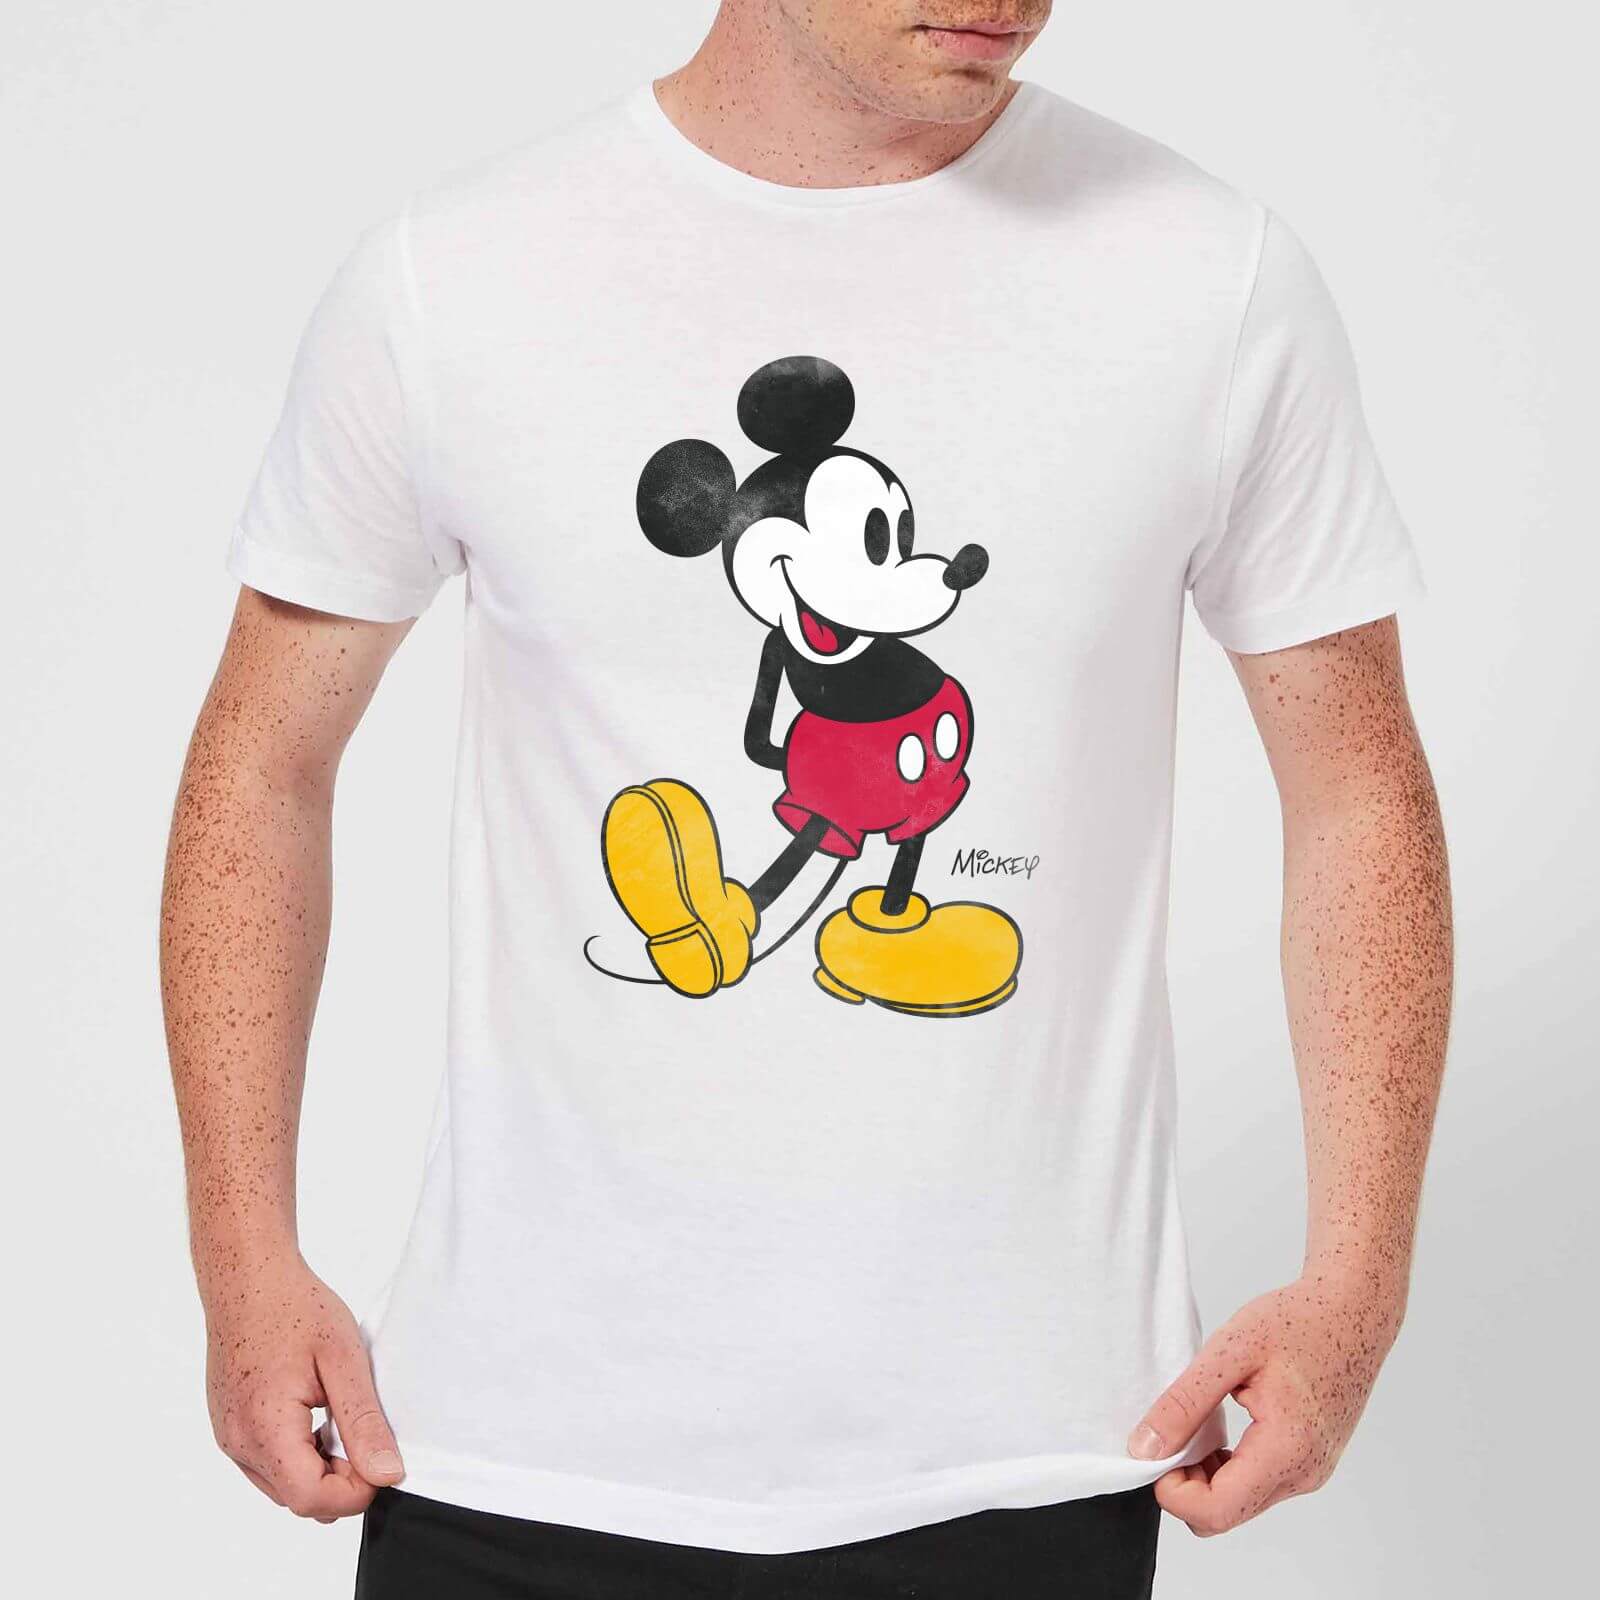 Camiseta Disney Mickey Mouse Pose Clásico - Hombre - Blanco - XXL